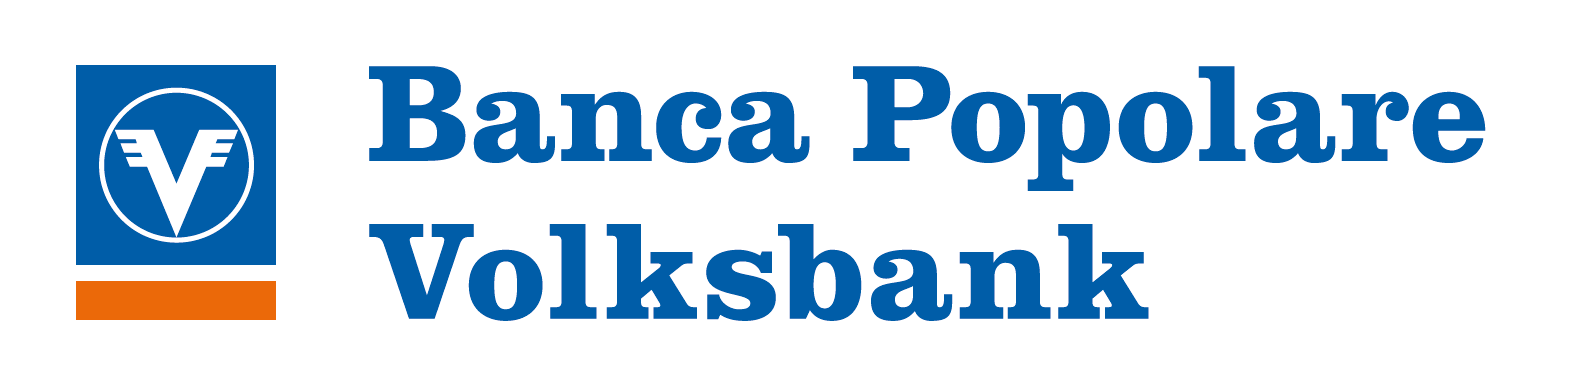 Banca Popolare Friuladria Logo photo - 1